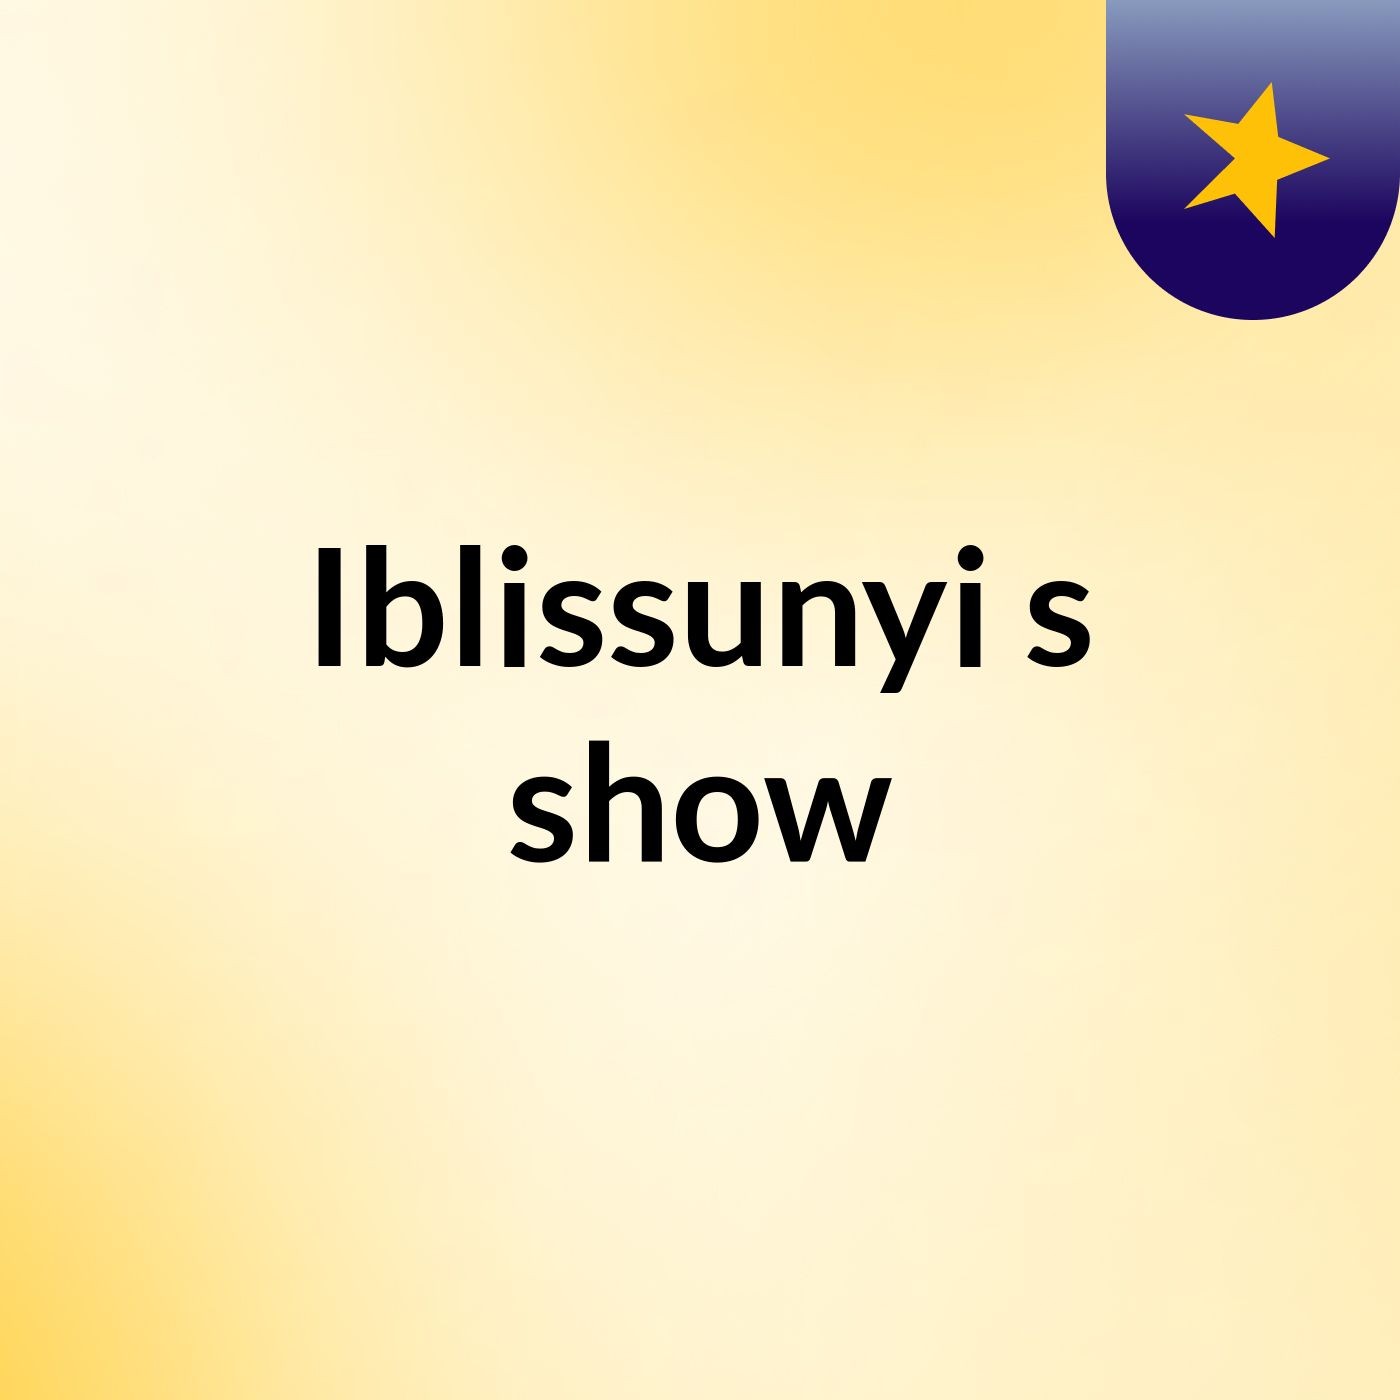 Iblissunyi's show